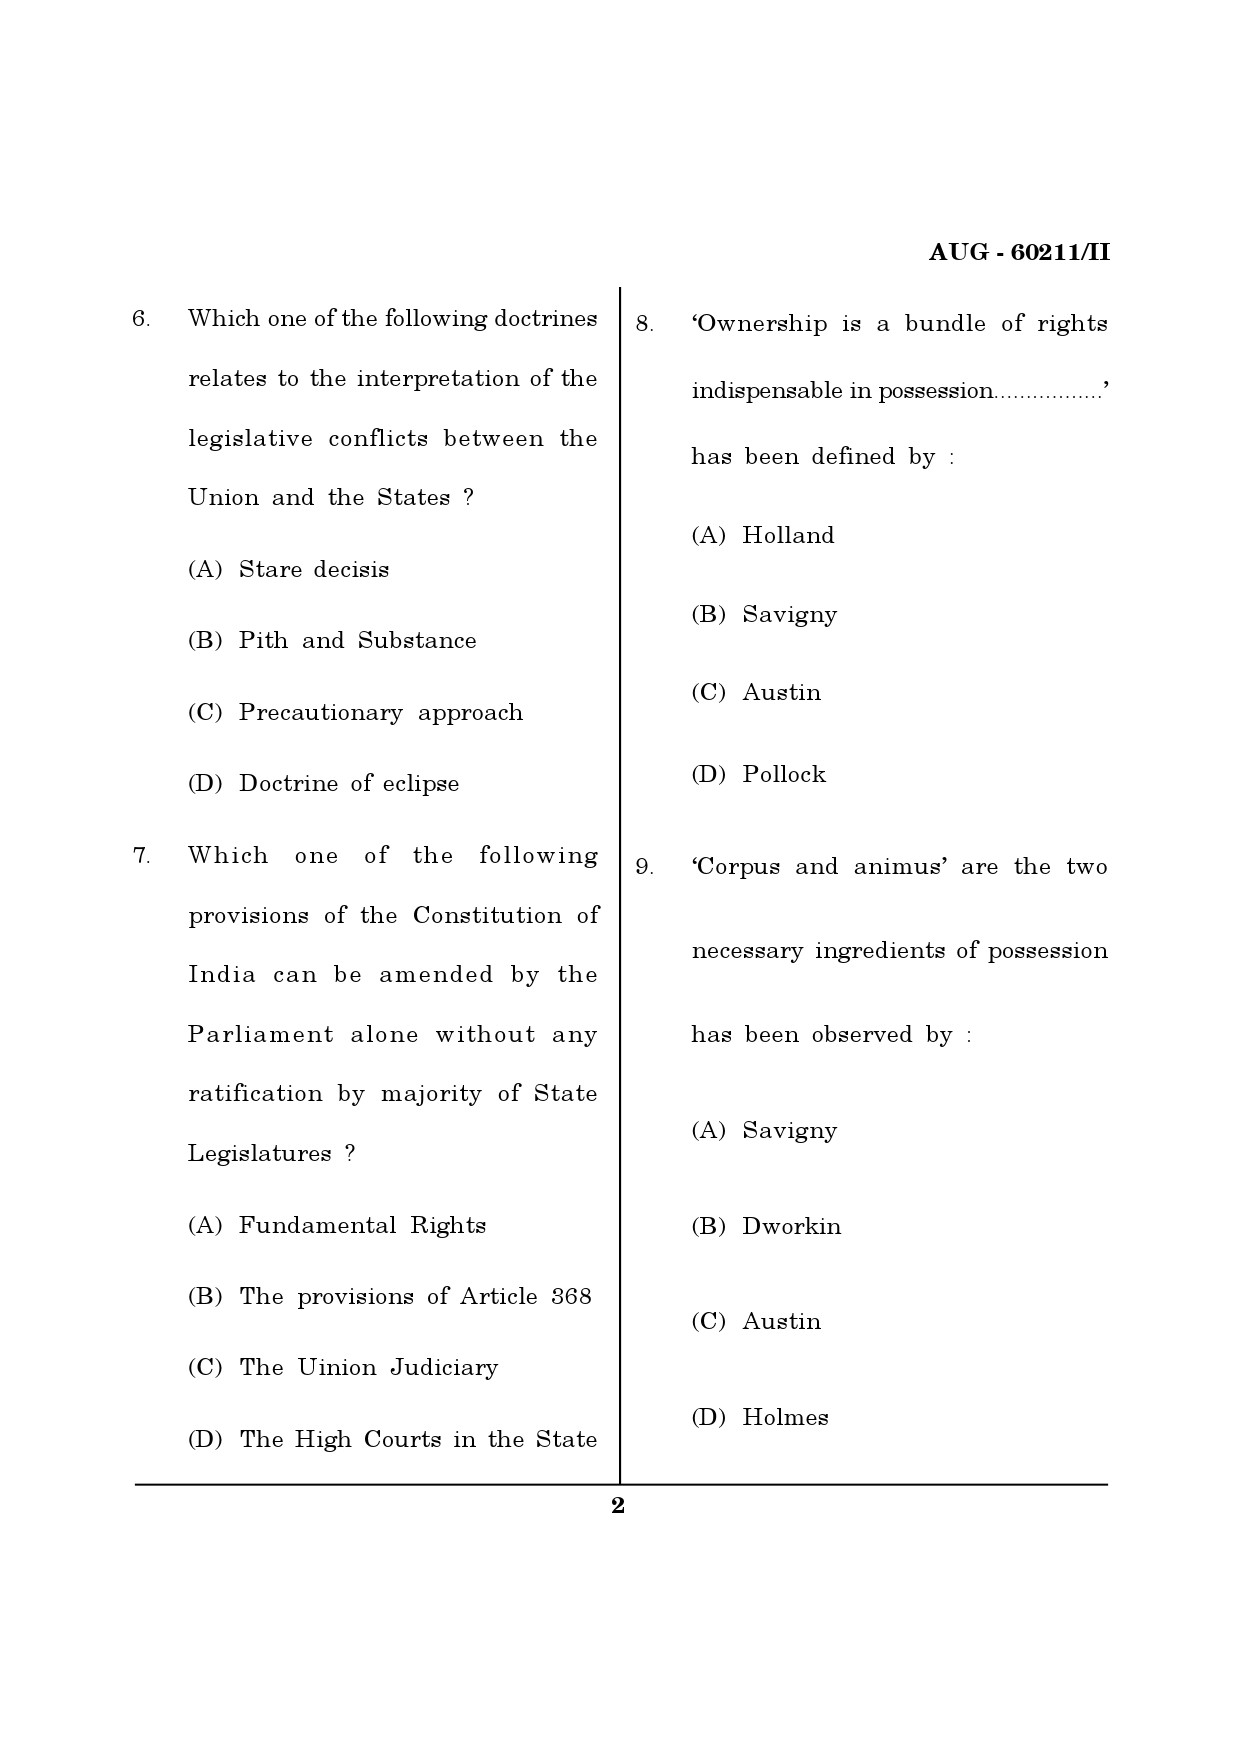 Maharashtra SET Law Question Paper II August 2011 2